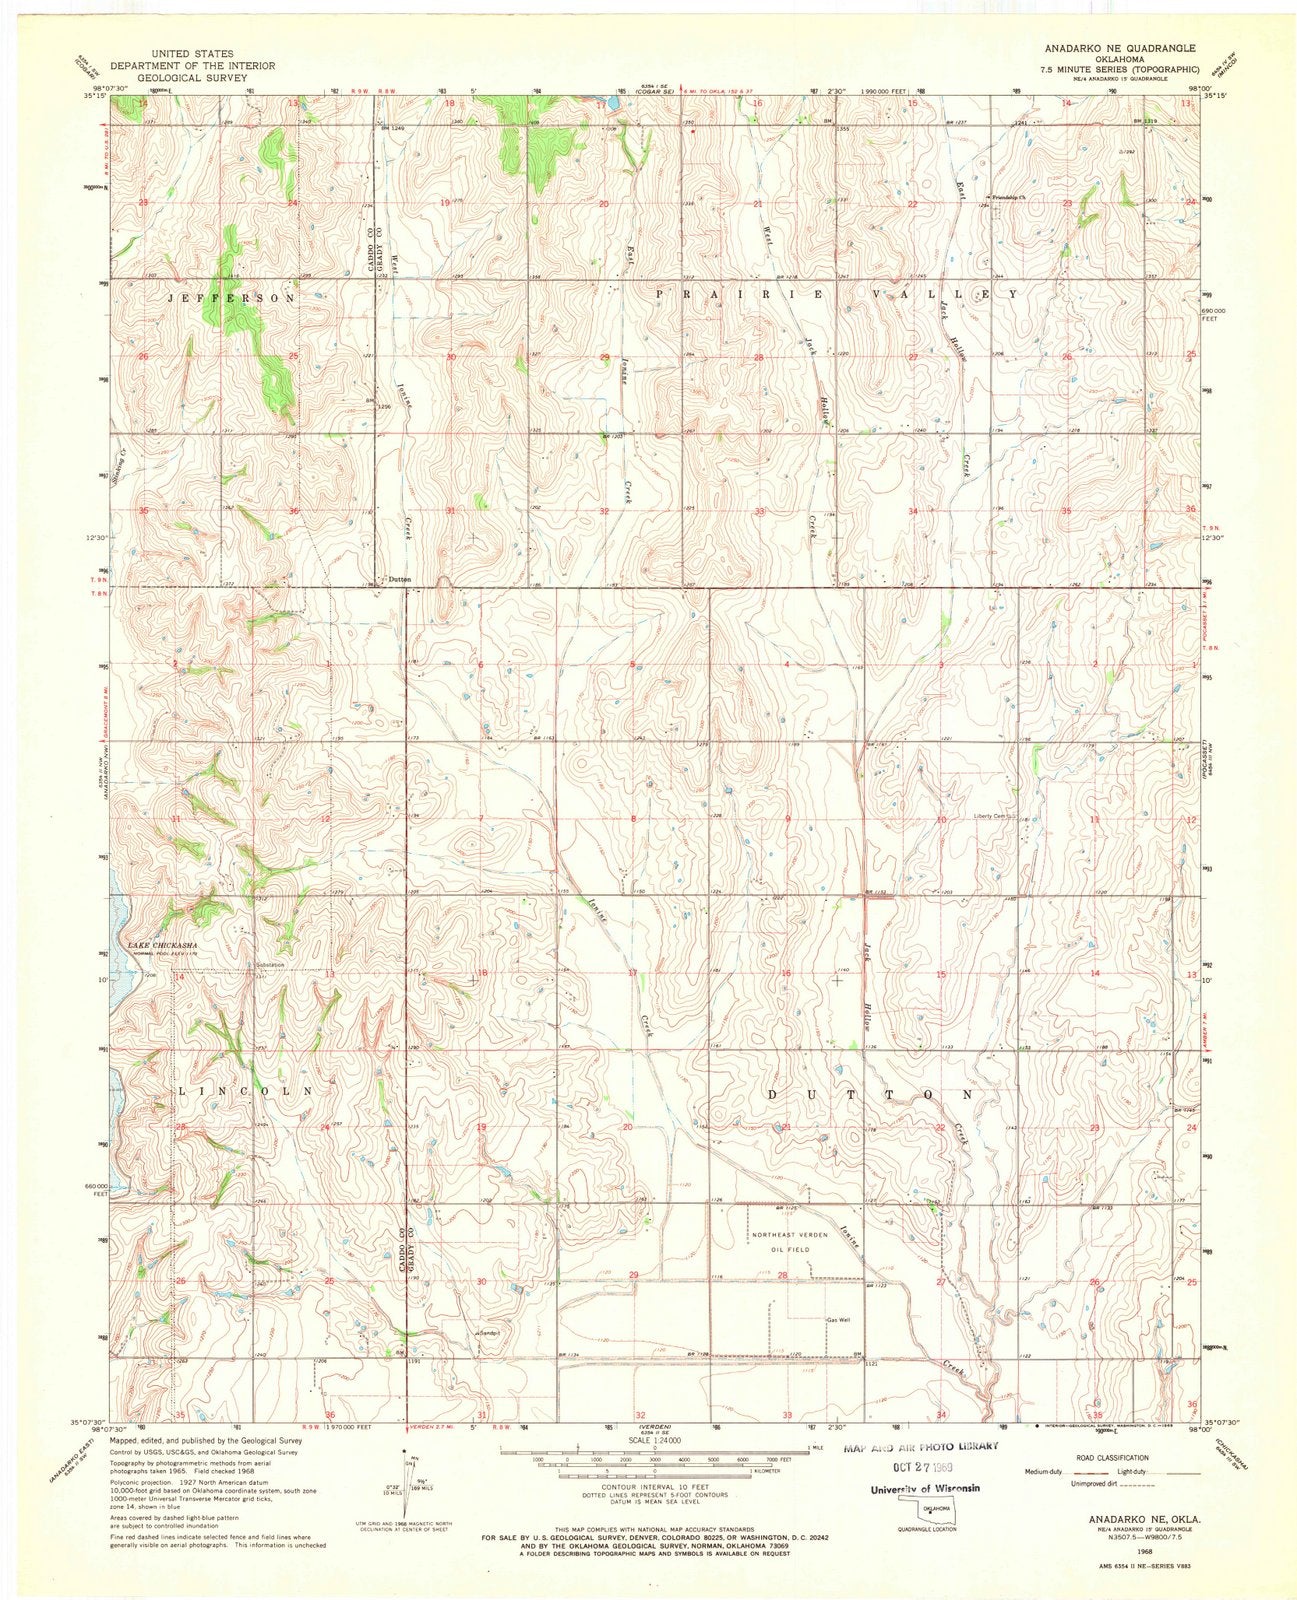 1968 Anadarko, OK - Oklahoma - USGS Topographic Map v3